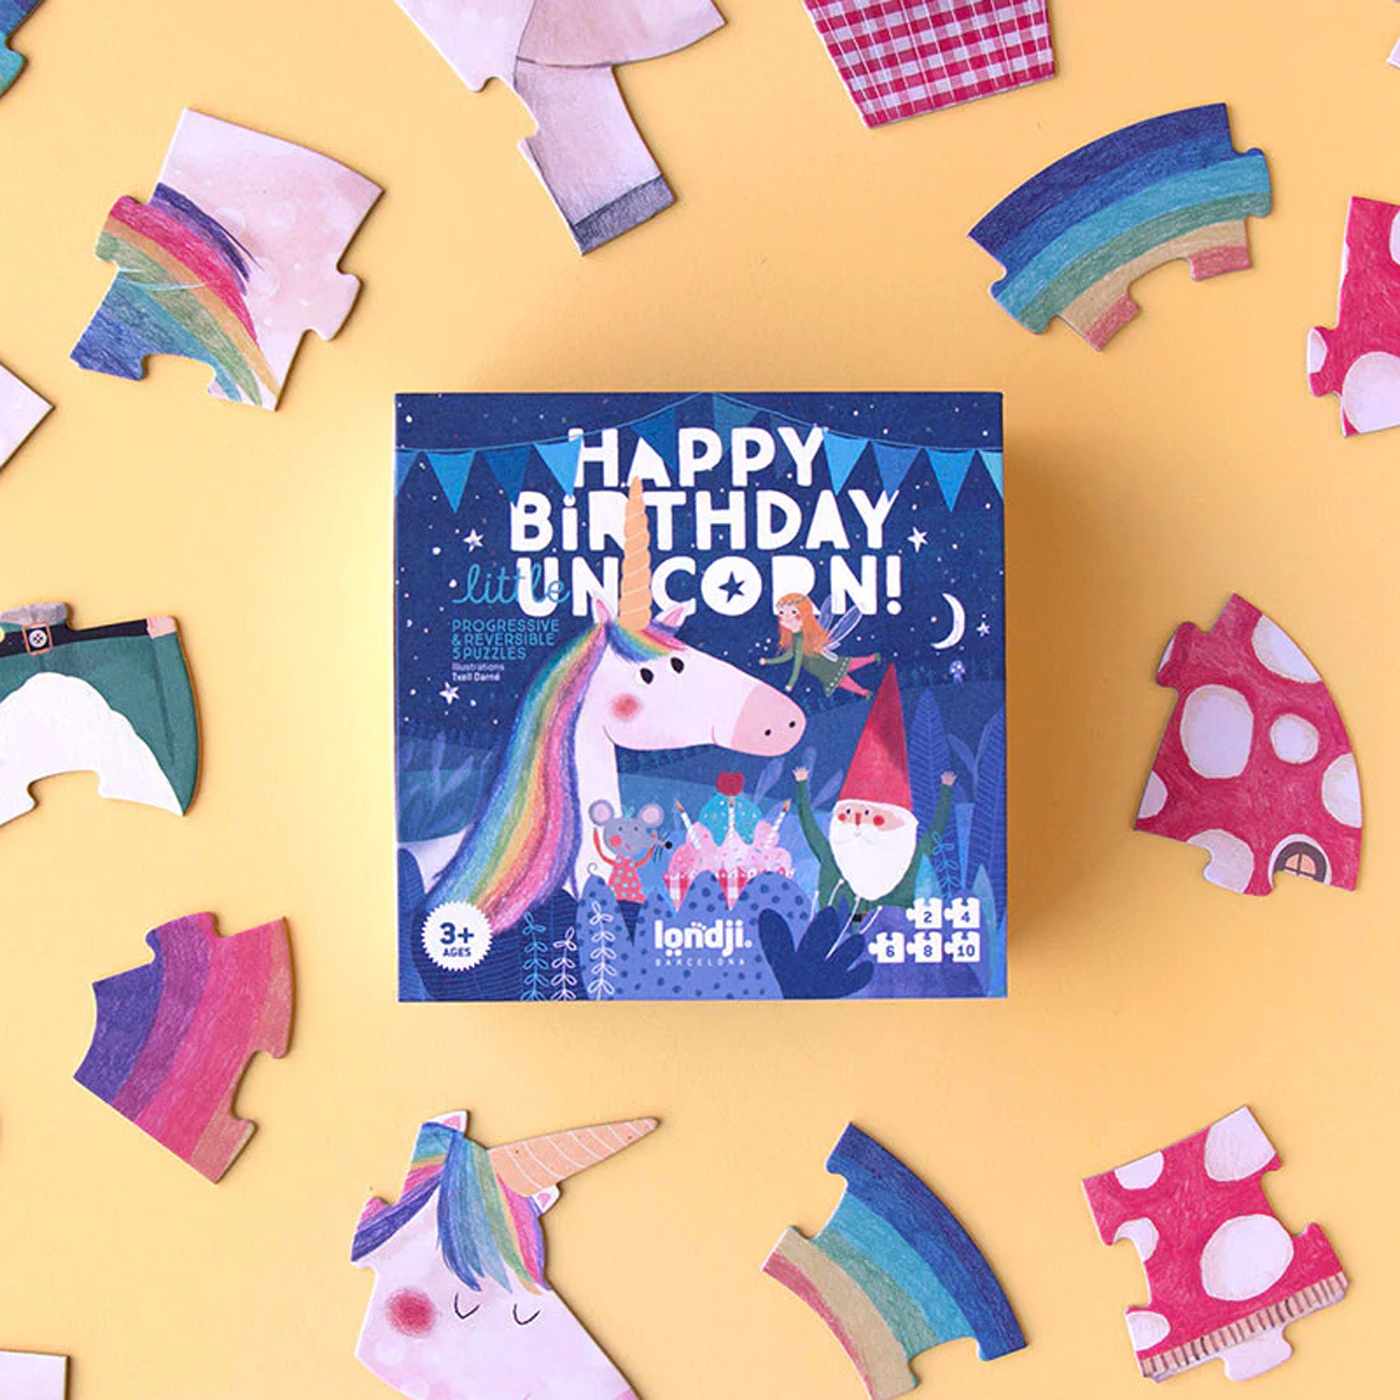 LONDJI Londji Puzzle - Happy Birthday Unicorn